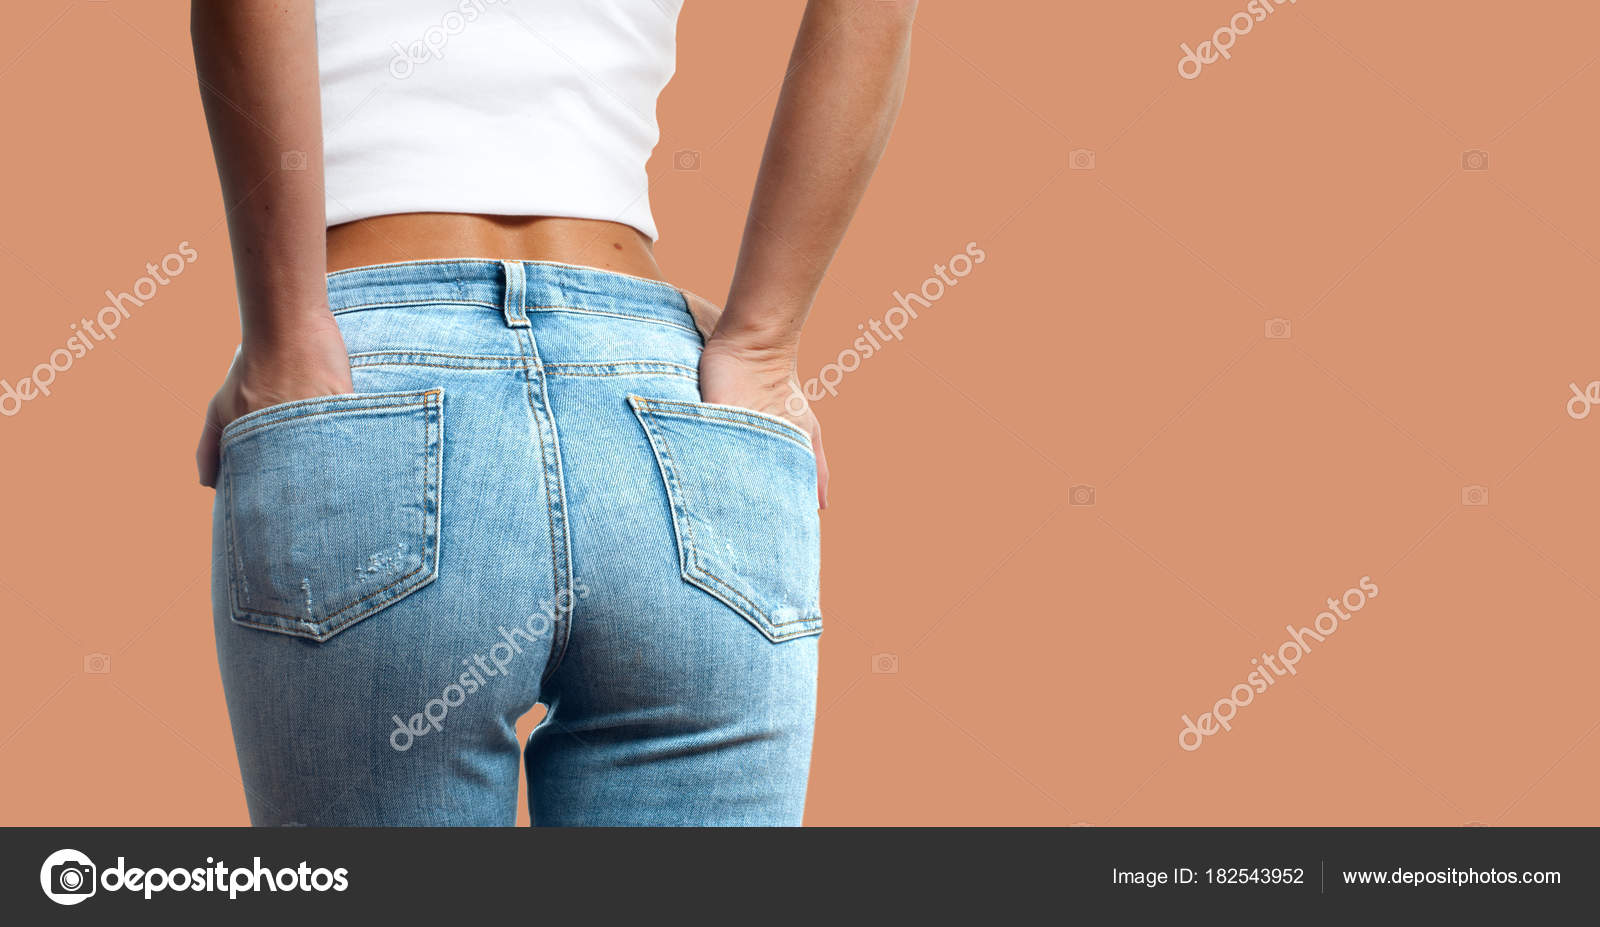 Women wearing tight pants